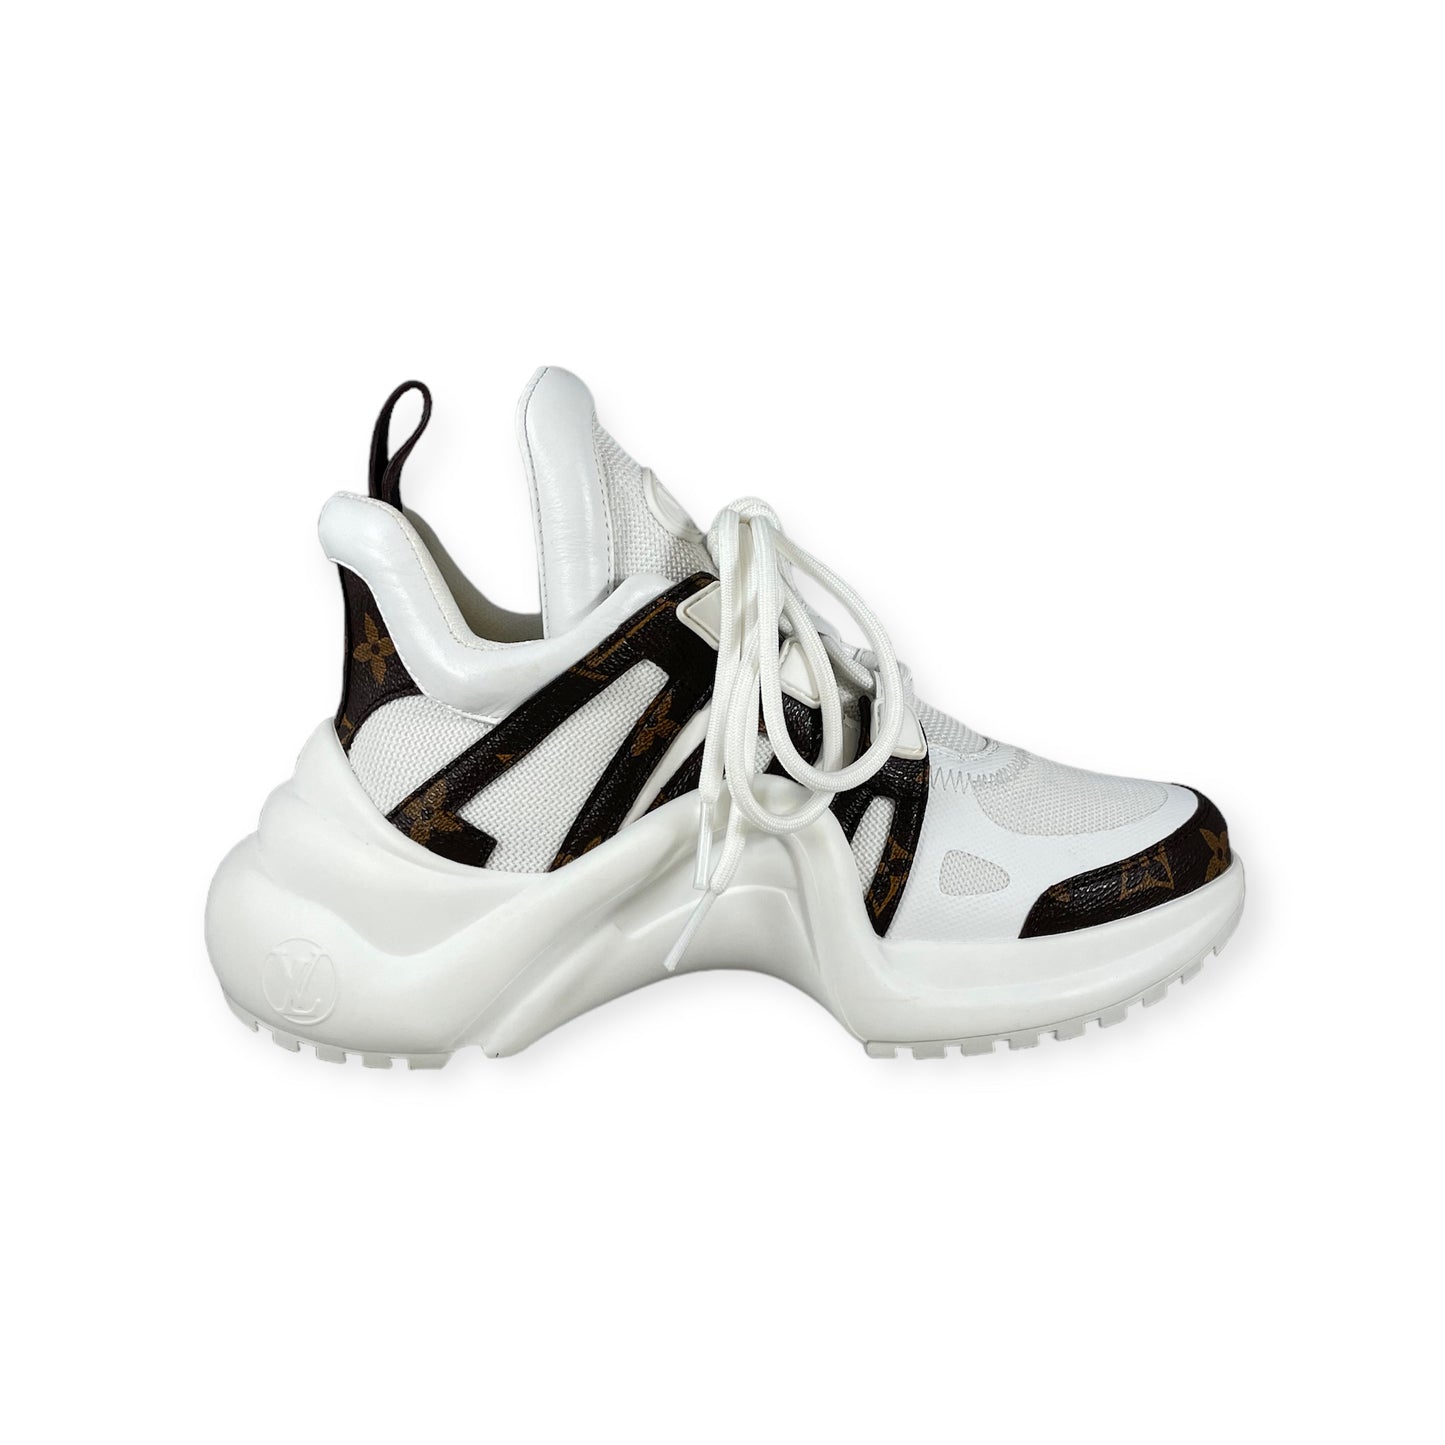 LOUIS VUITTON Archlight Sneakers in White Monogram | Size 36